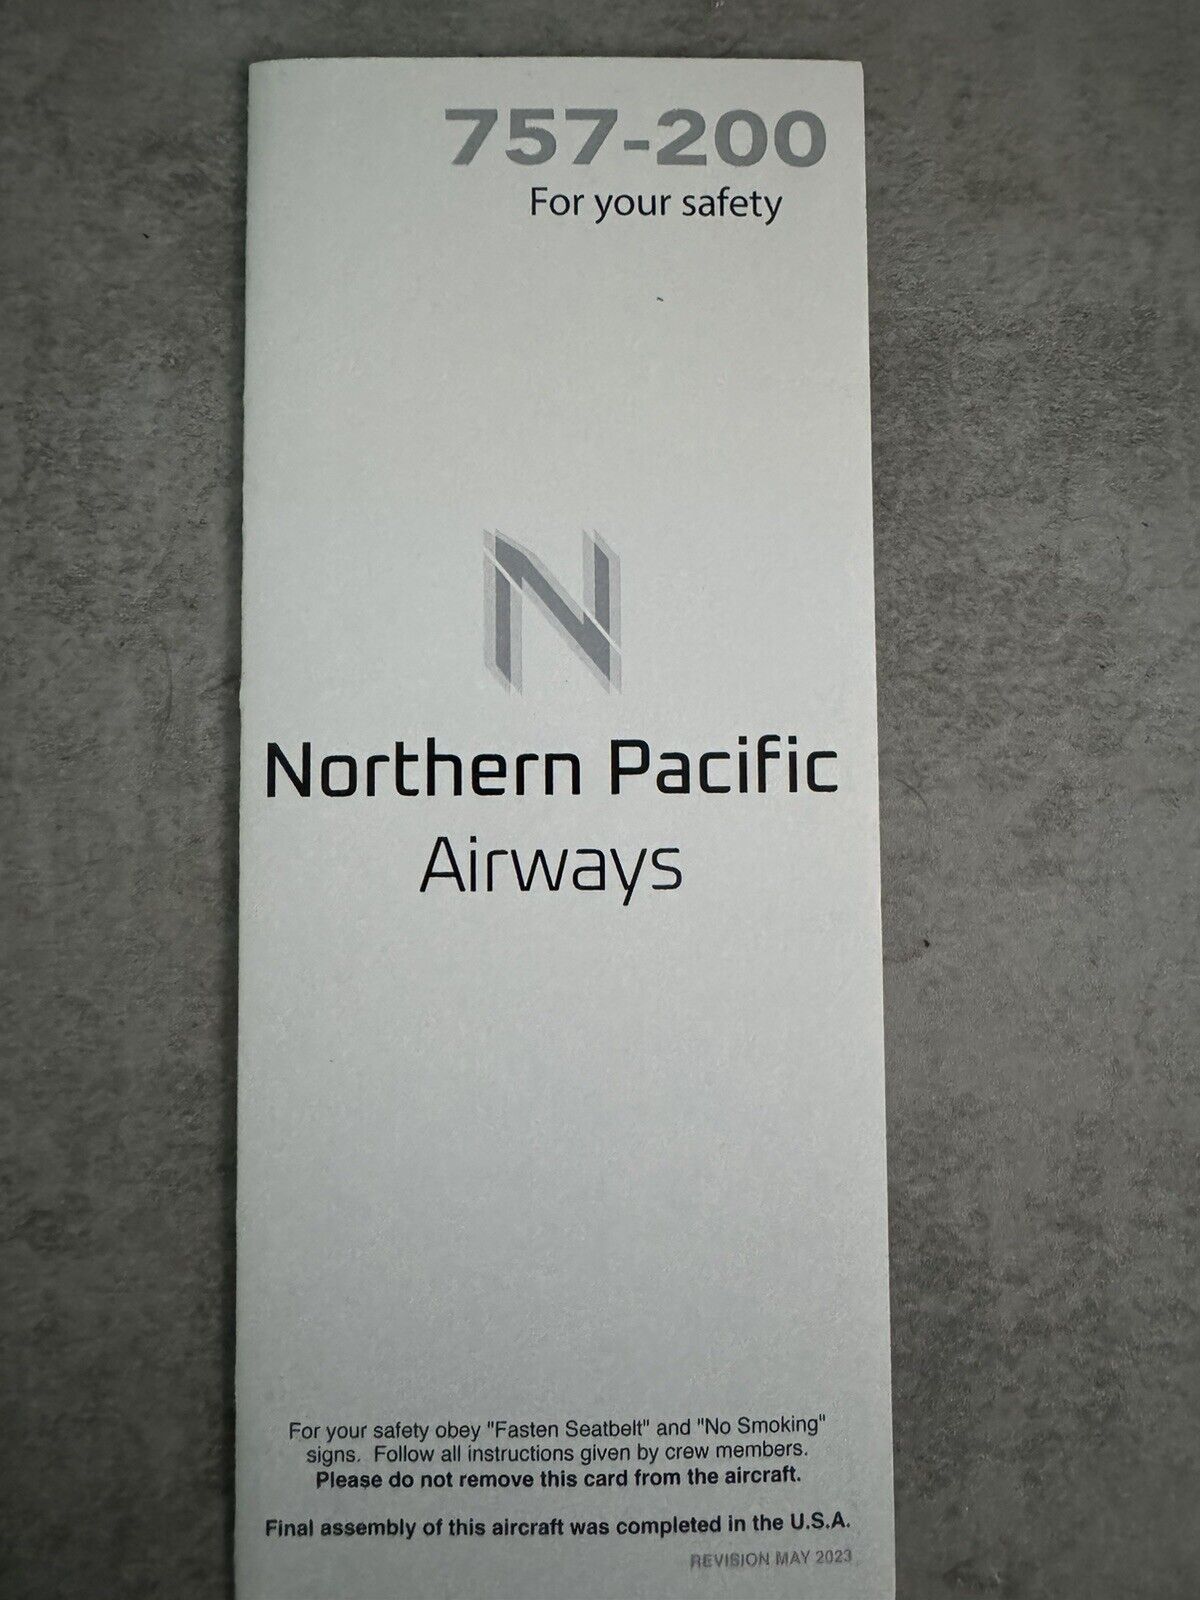 Northern Pacific Airways Boeing 757-200 safety card RARE